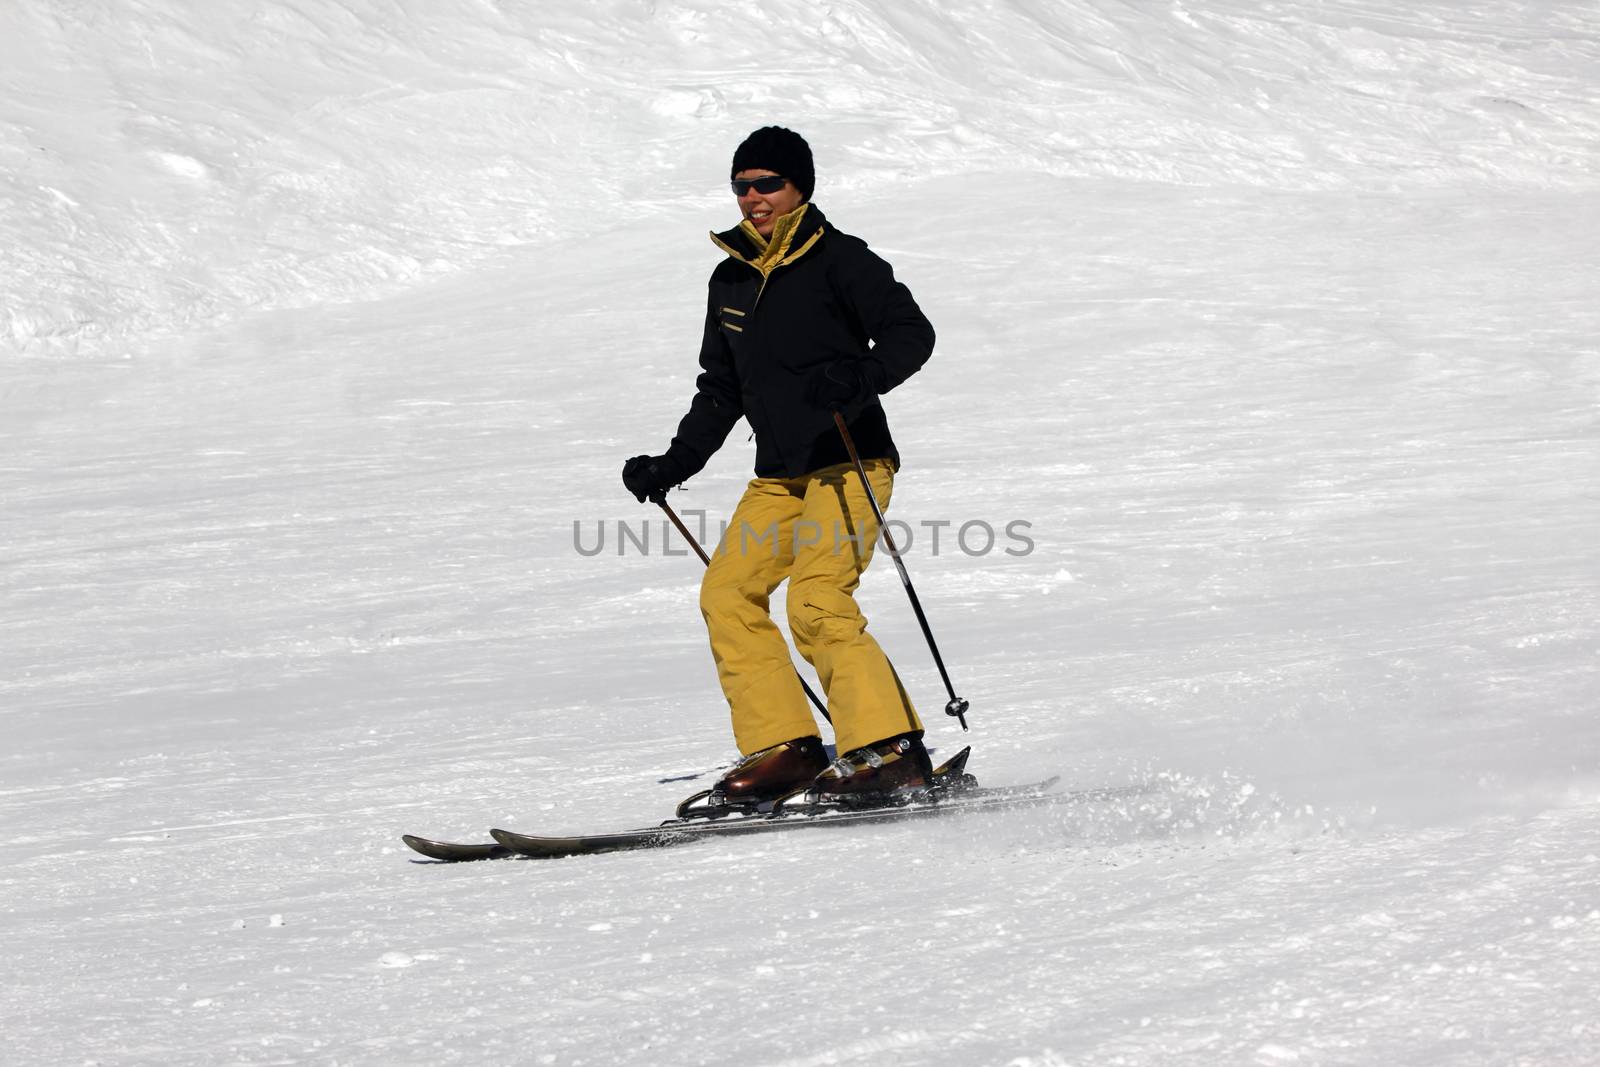 Skier riding fresh powder snow by friday